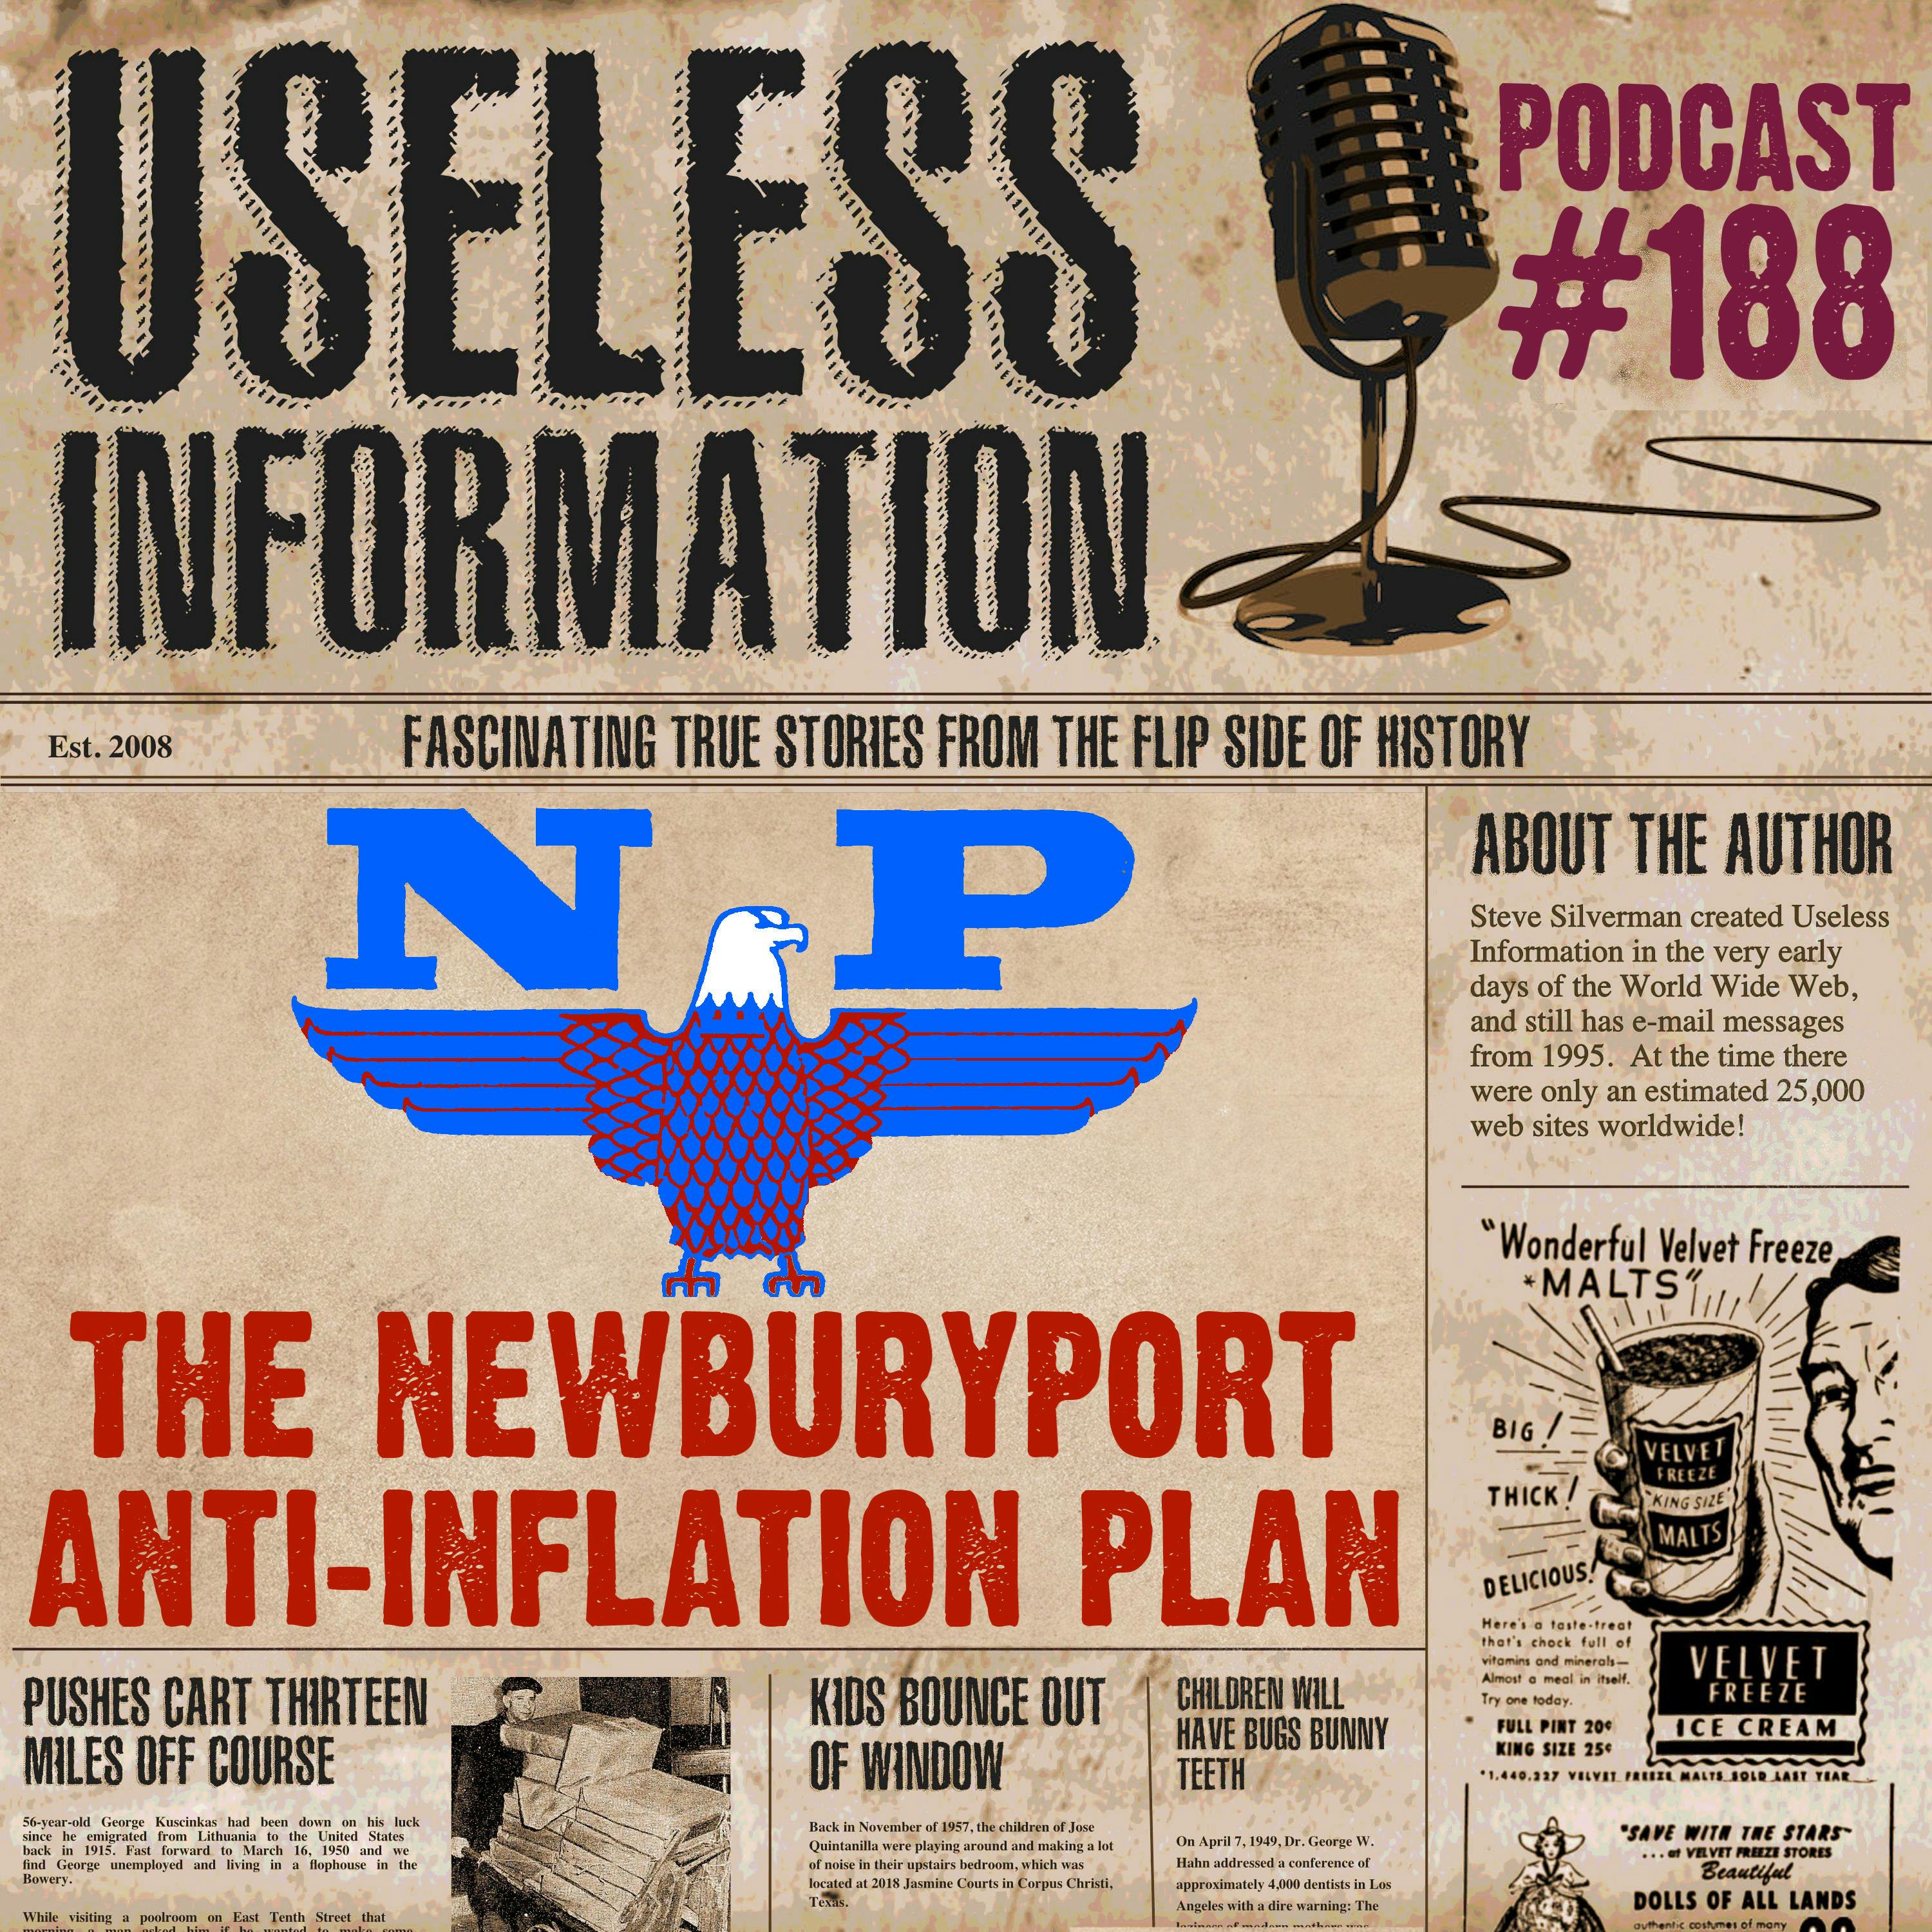 The Newburyport Anti-Inflation Plan - UI #188